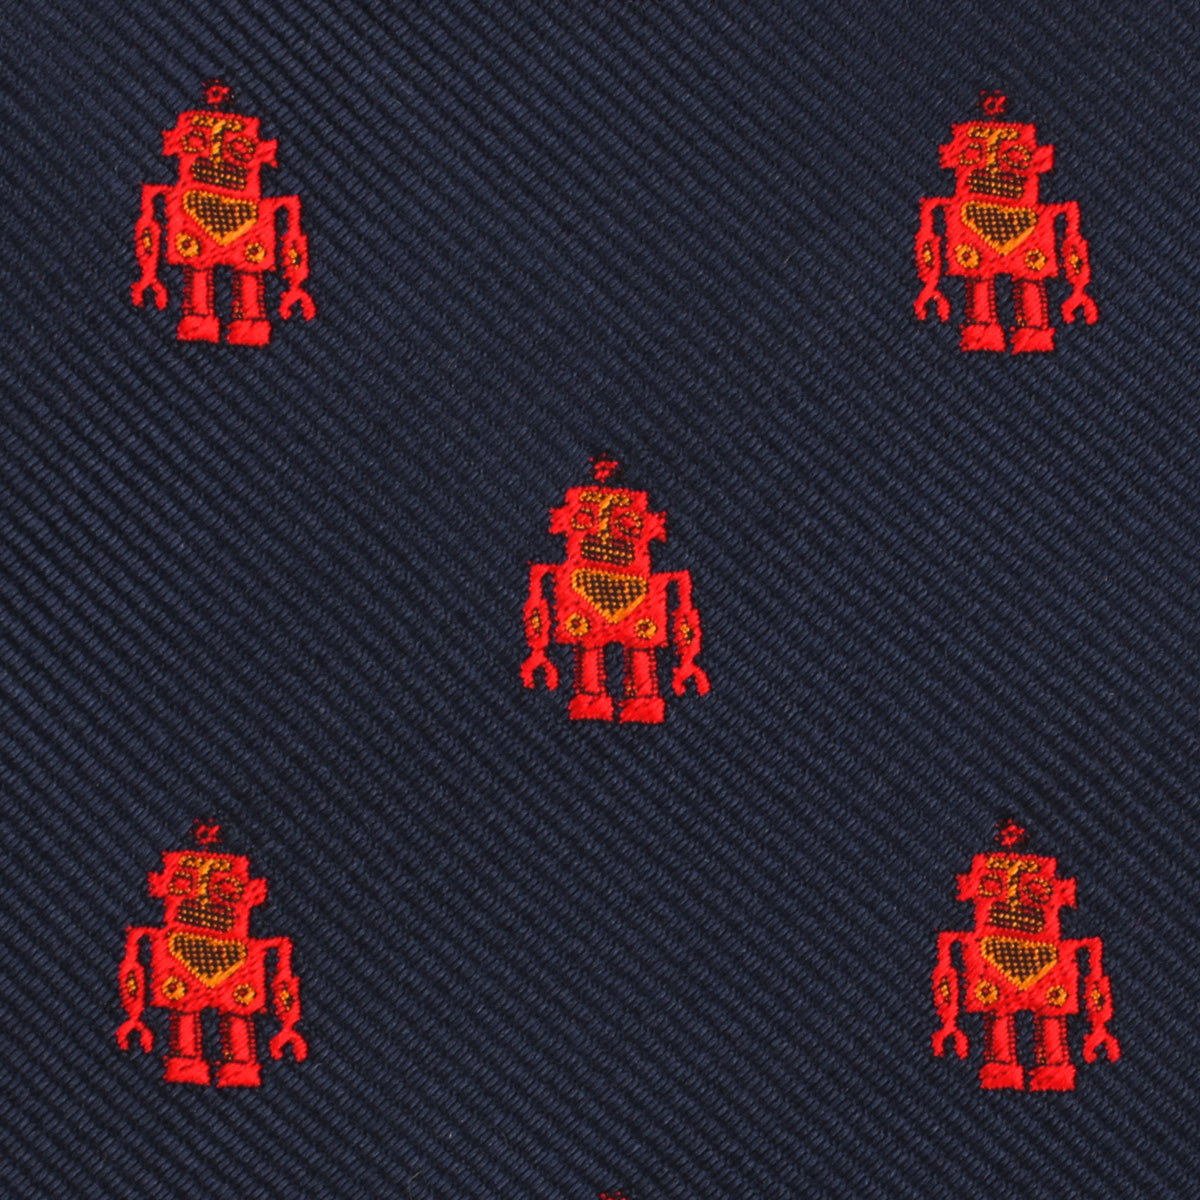 Angry Robot Necktie Fabric